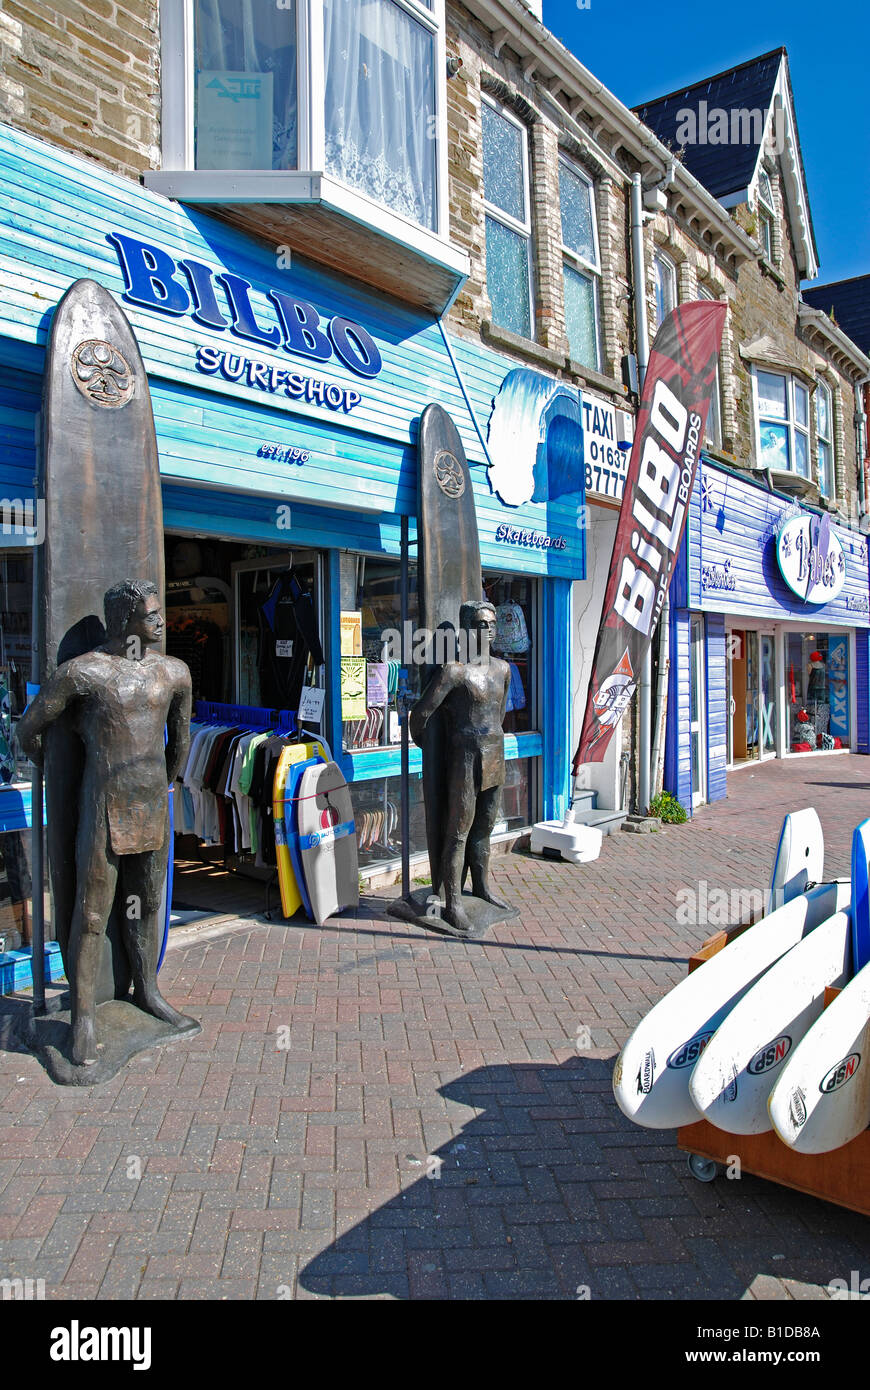 Bilbo surf shop,newqauy,Cornwall, Inglaterra Foto de stock